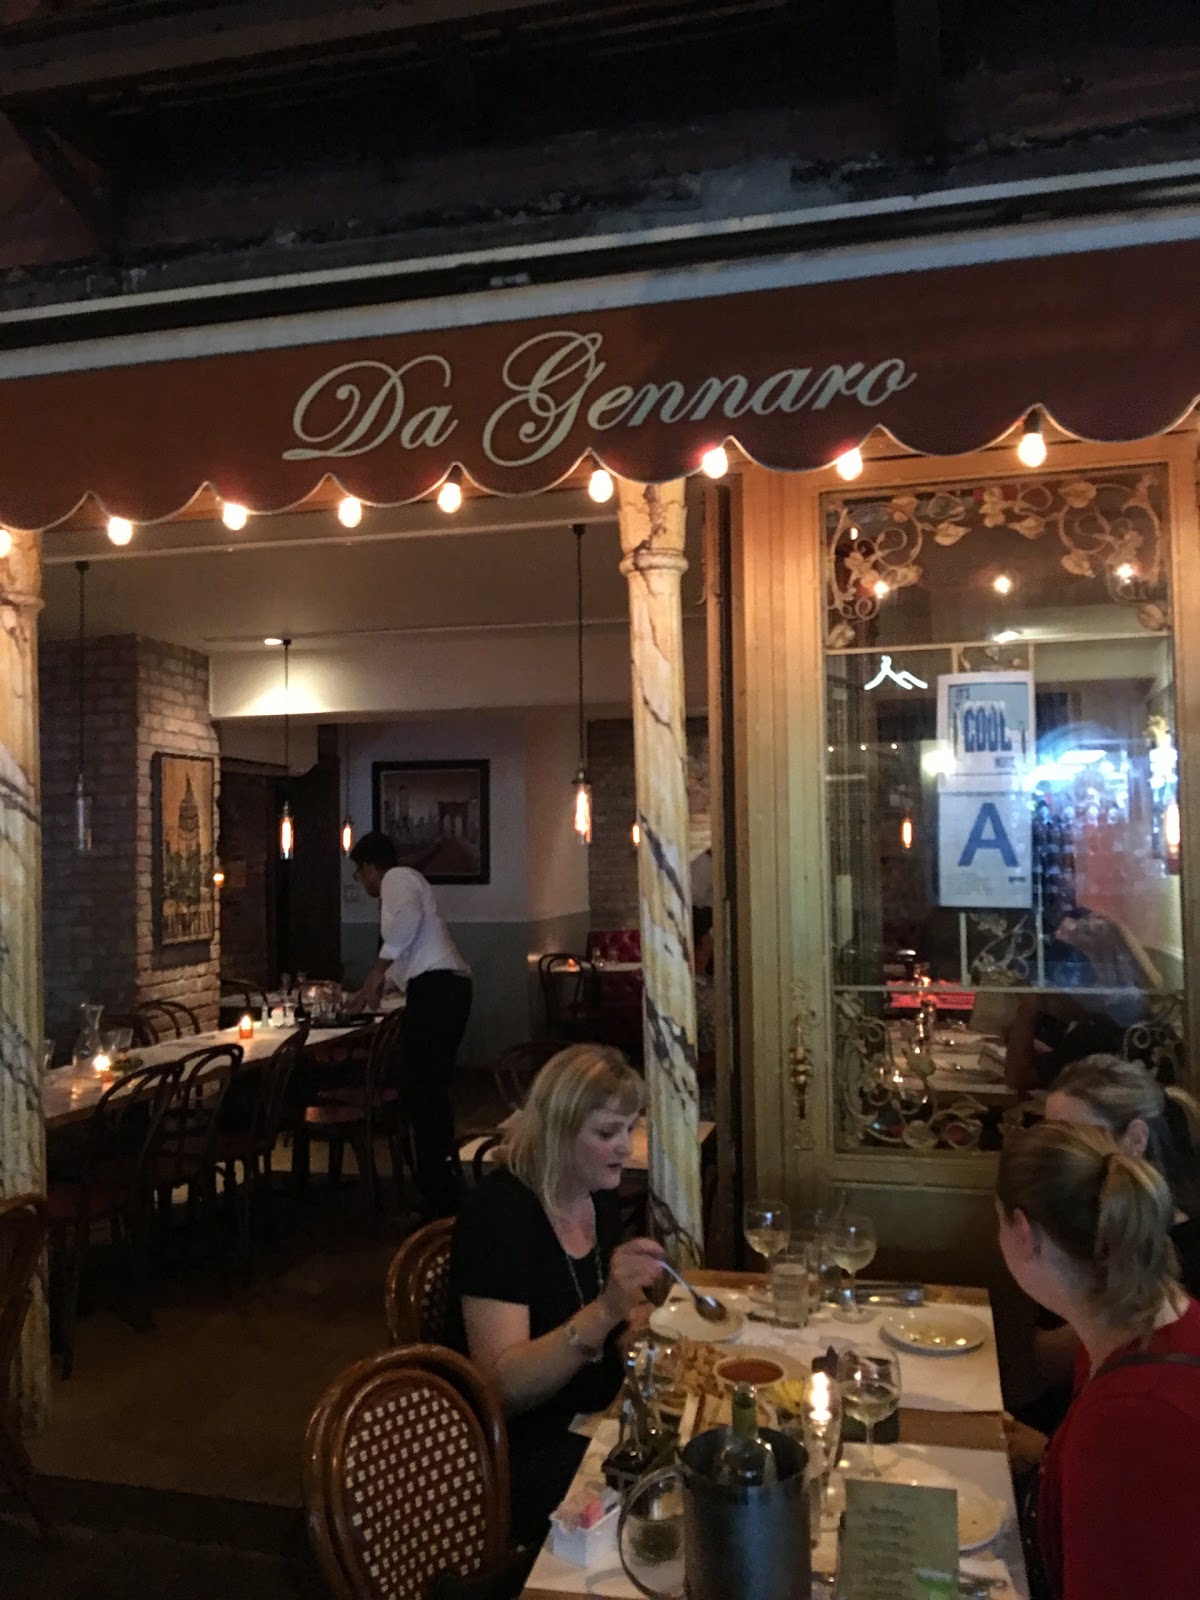 Photo of Da Gennaro in New York City, New York, United States - 2 Picture of Restaurant, Food, Point of interest, Establishment, Bar